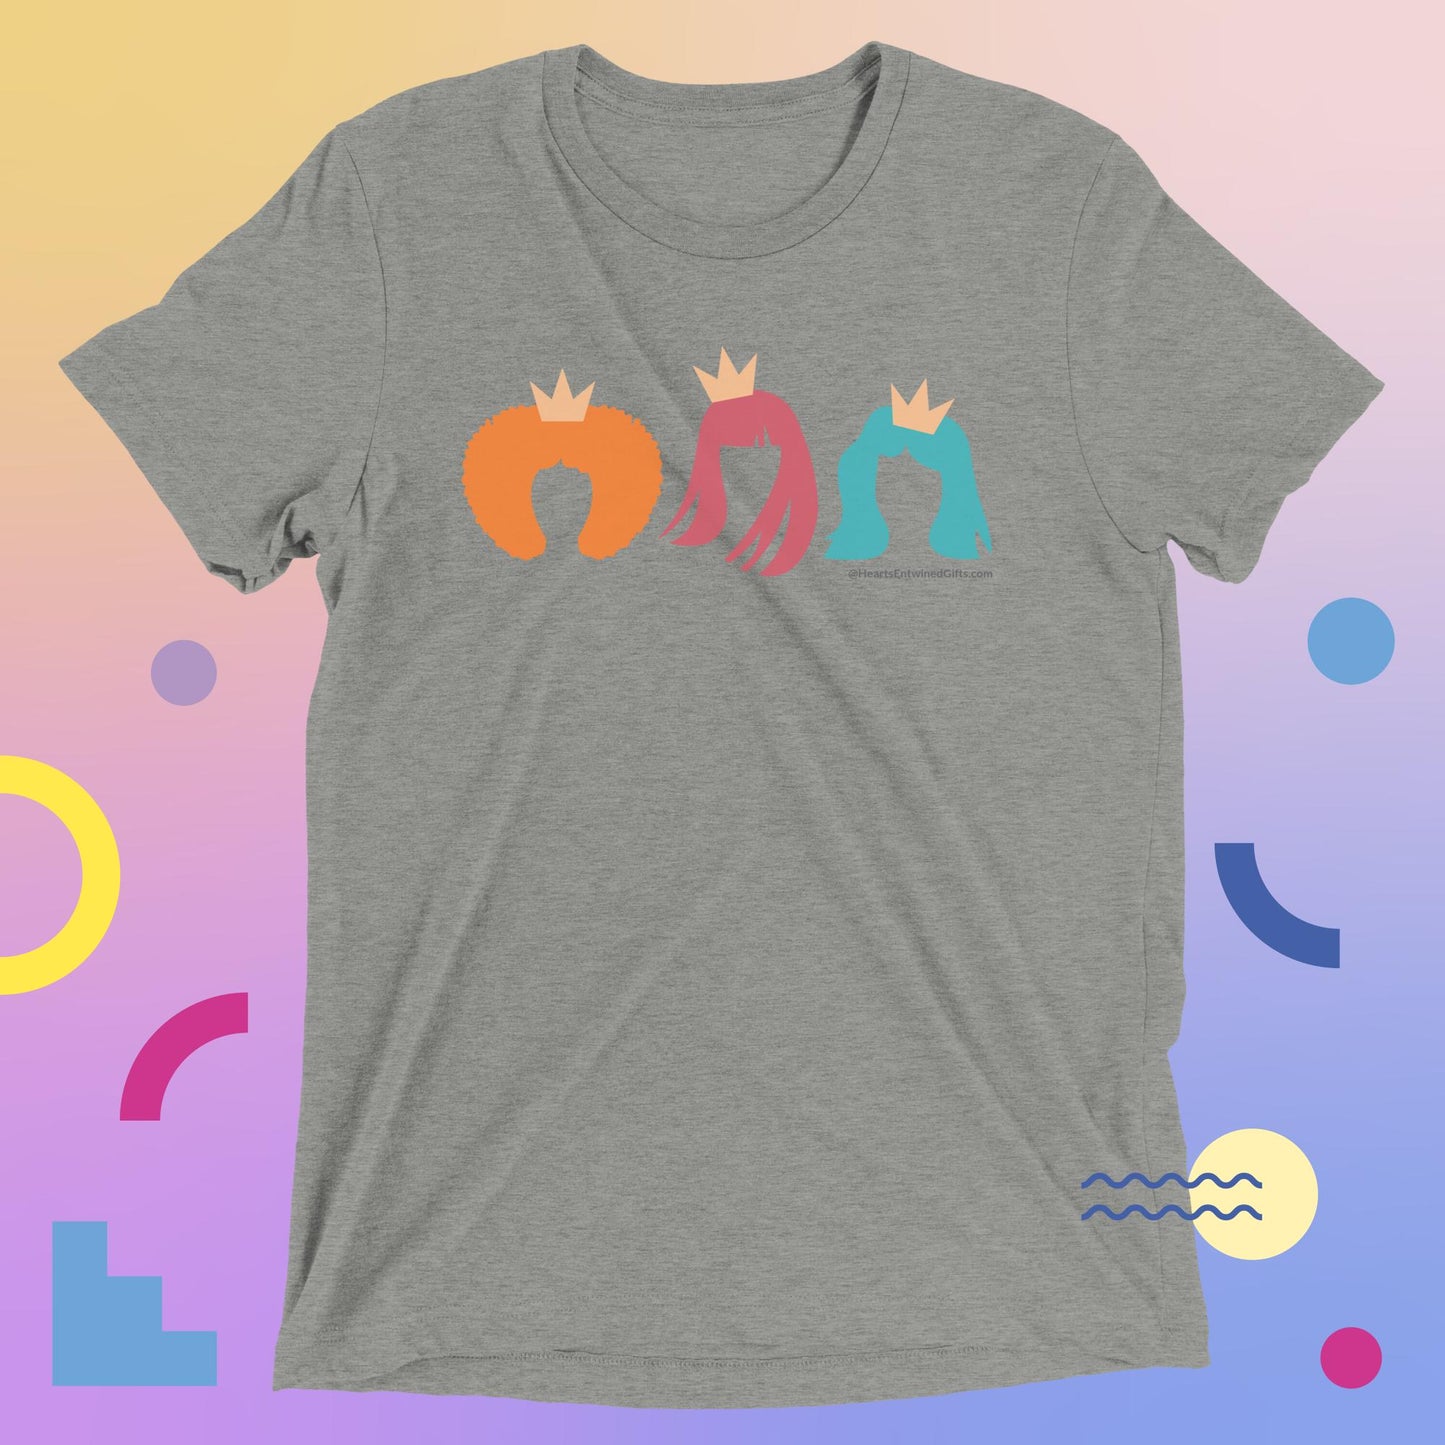 Queens! | Adult Unisex Tri-Blend T-Shirt